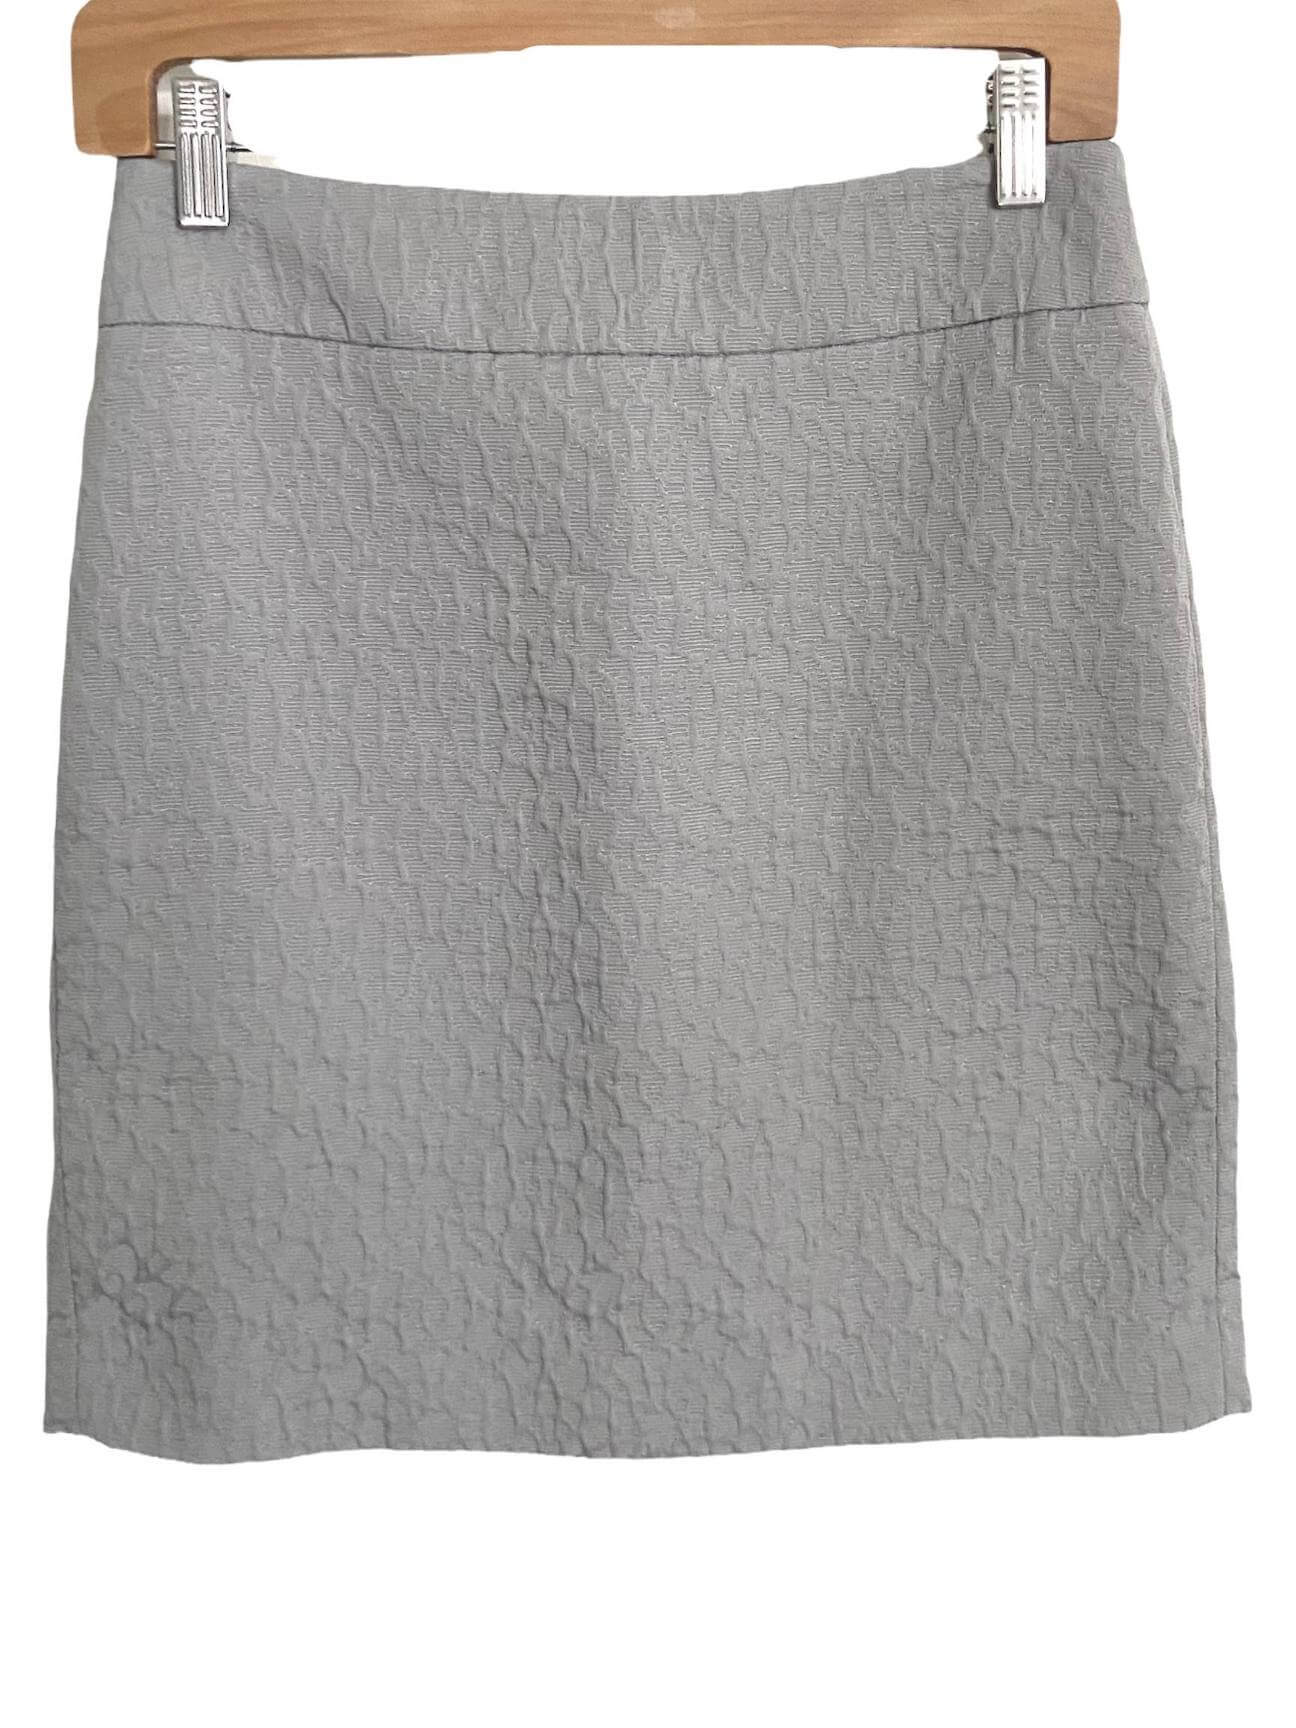 Light Summer LOFT gray textured mini pencil skirt 